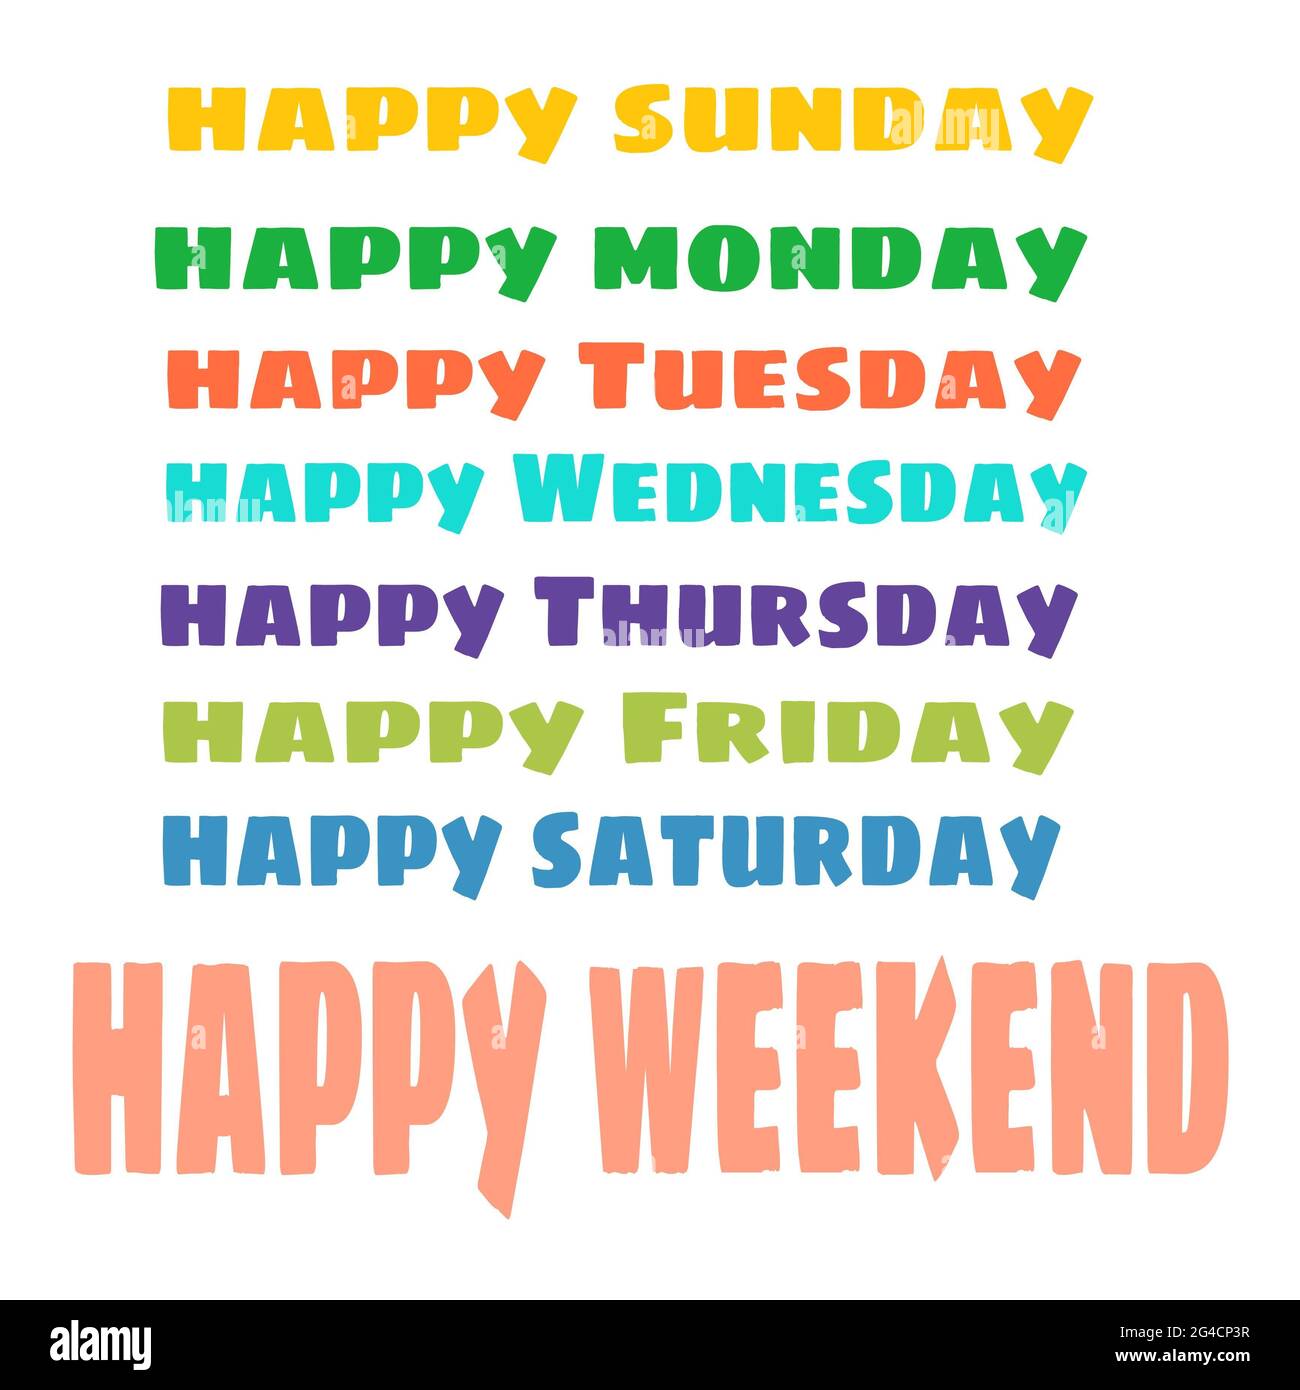 Set Of Weekdays Monday Tuesday Wednesday Thursday Friday Saturday Sunday  Stock Illustration - Download Image Now - iStock